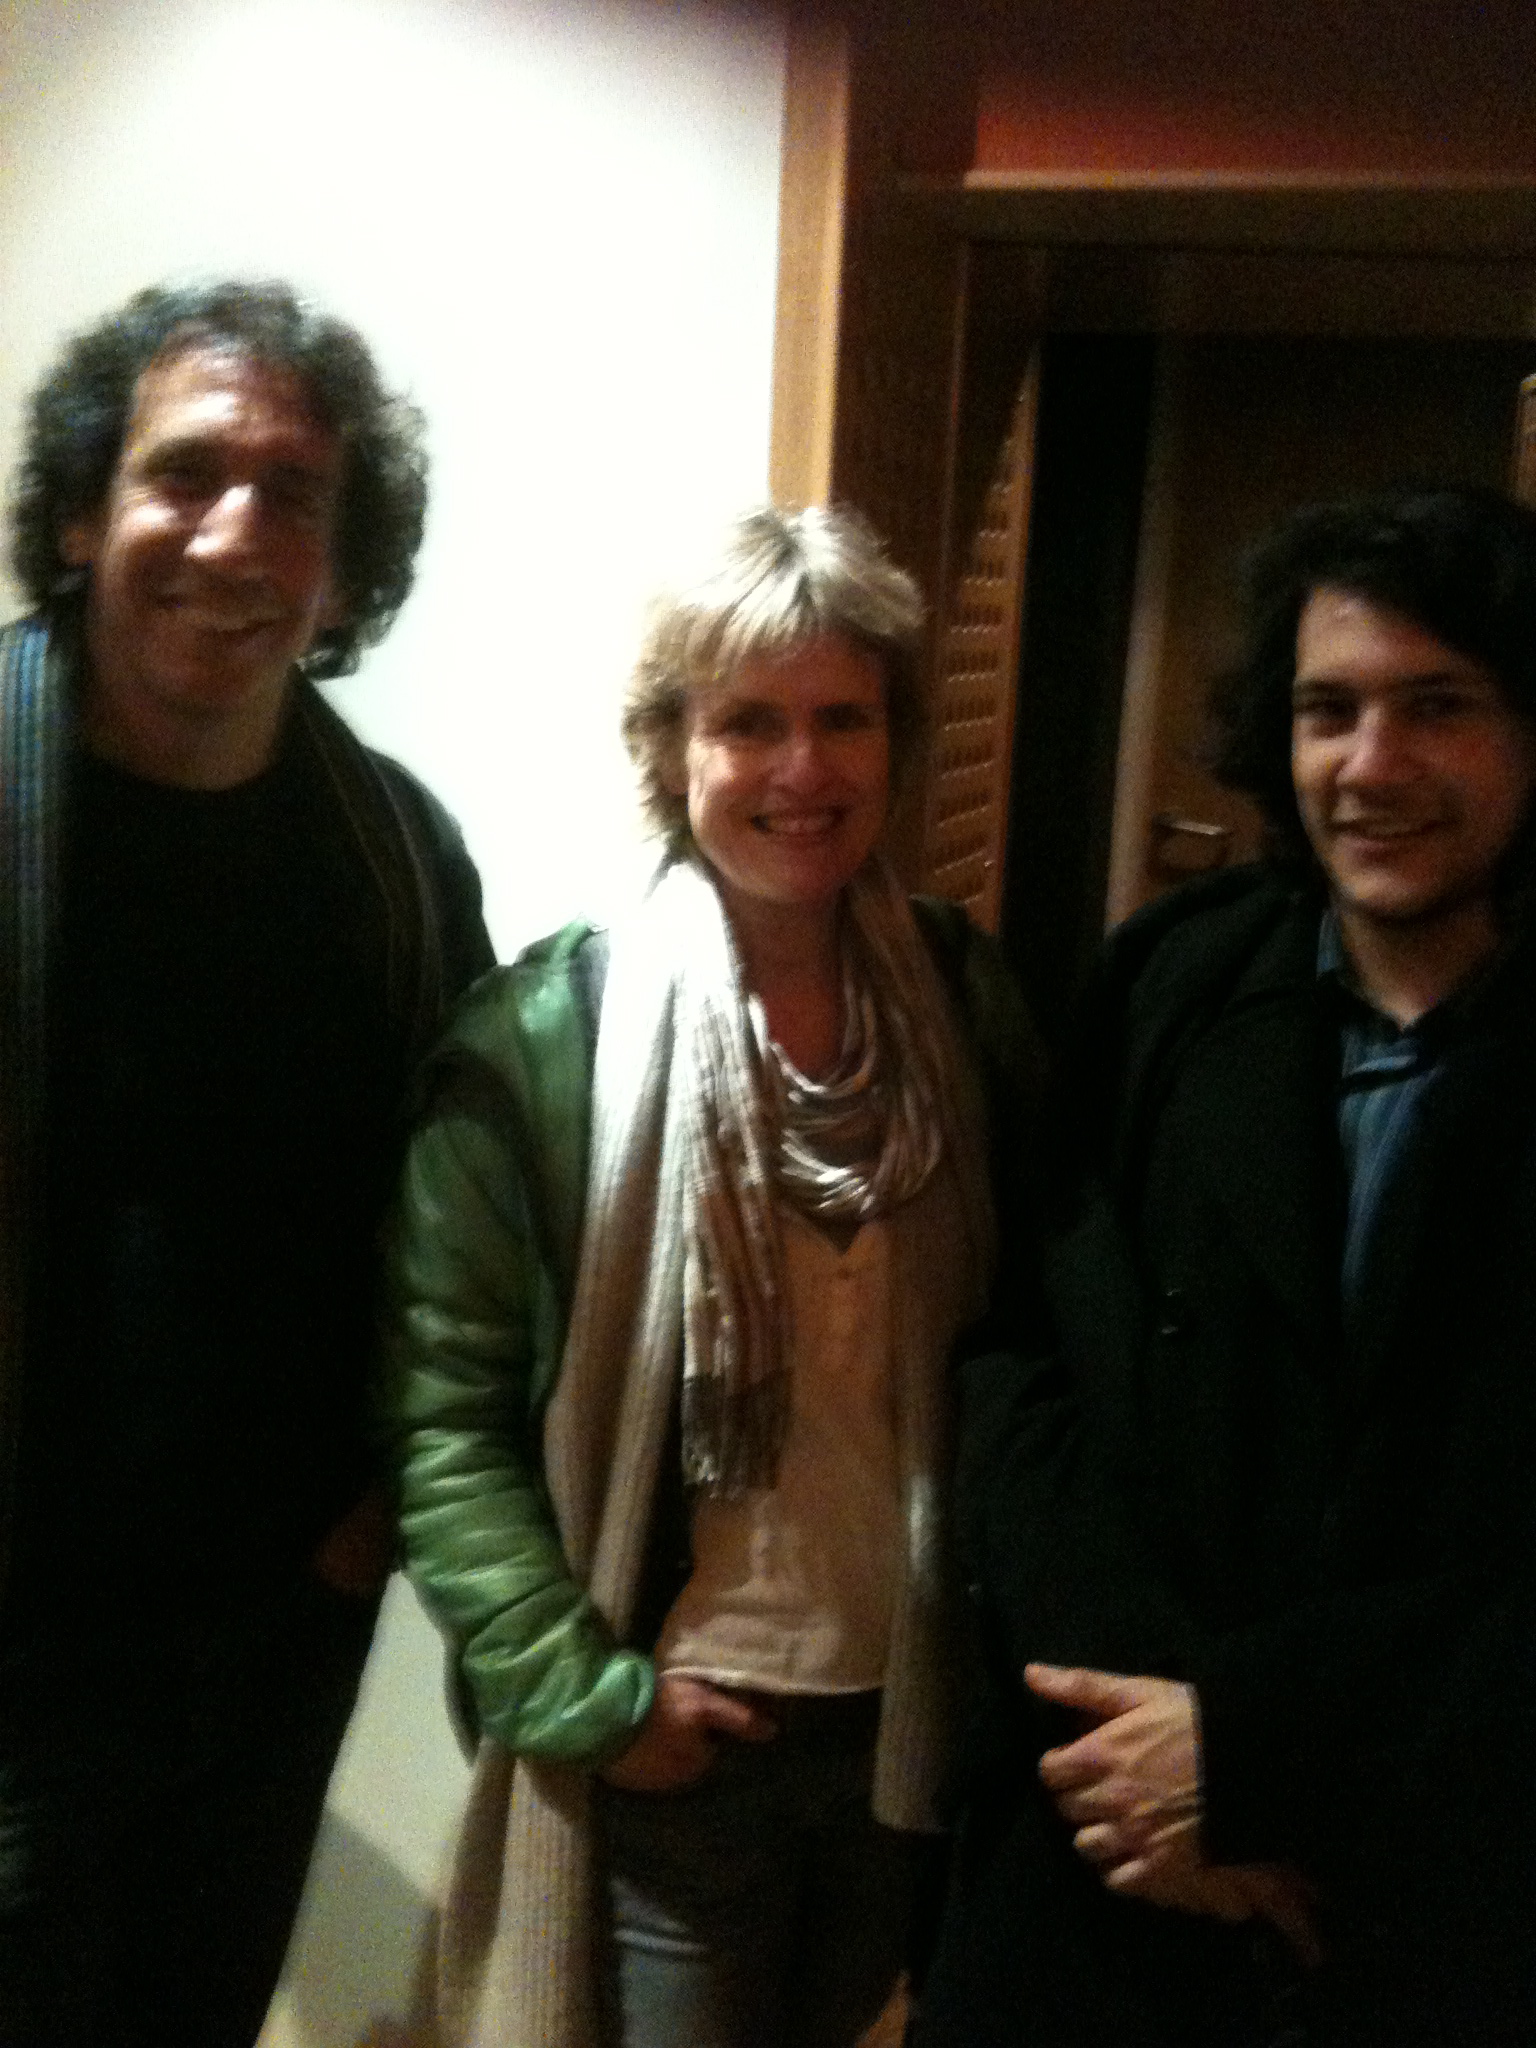 Jeff Atmajian (orchestrator), Rachel Portman (composer) & Jehan Stefan (assistant to orchestrator)